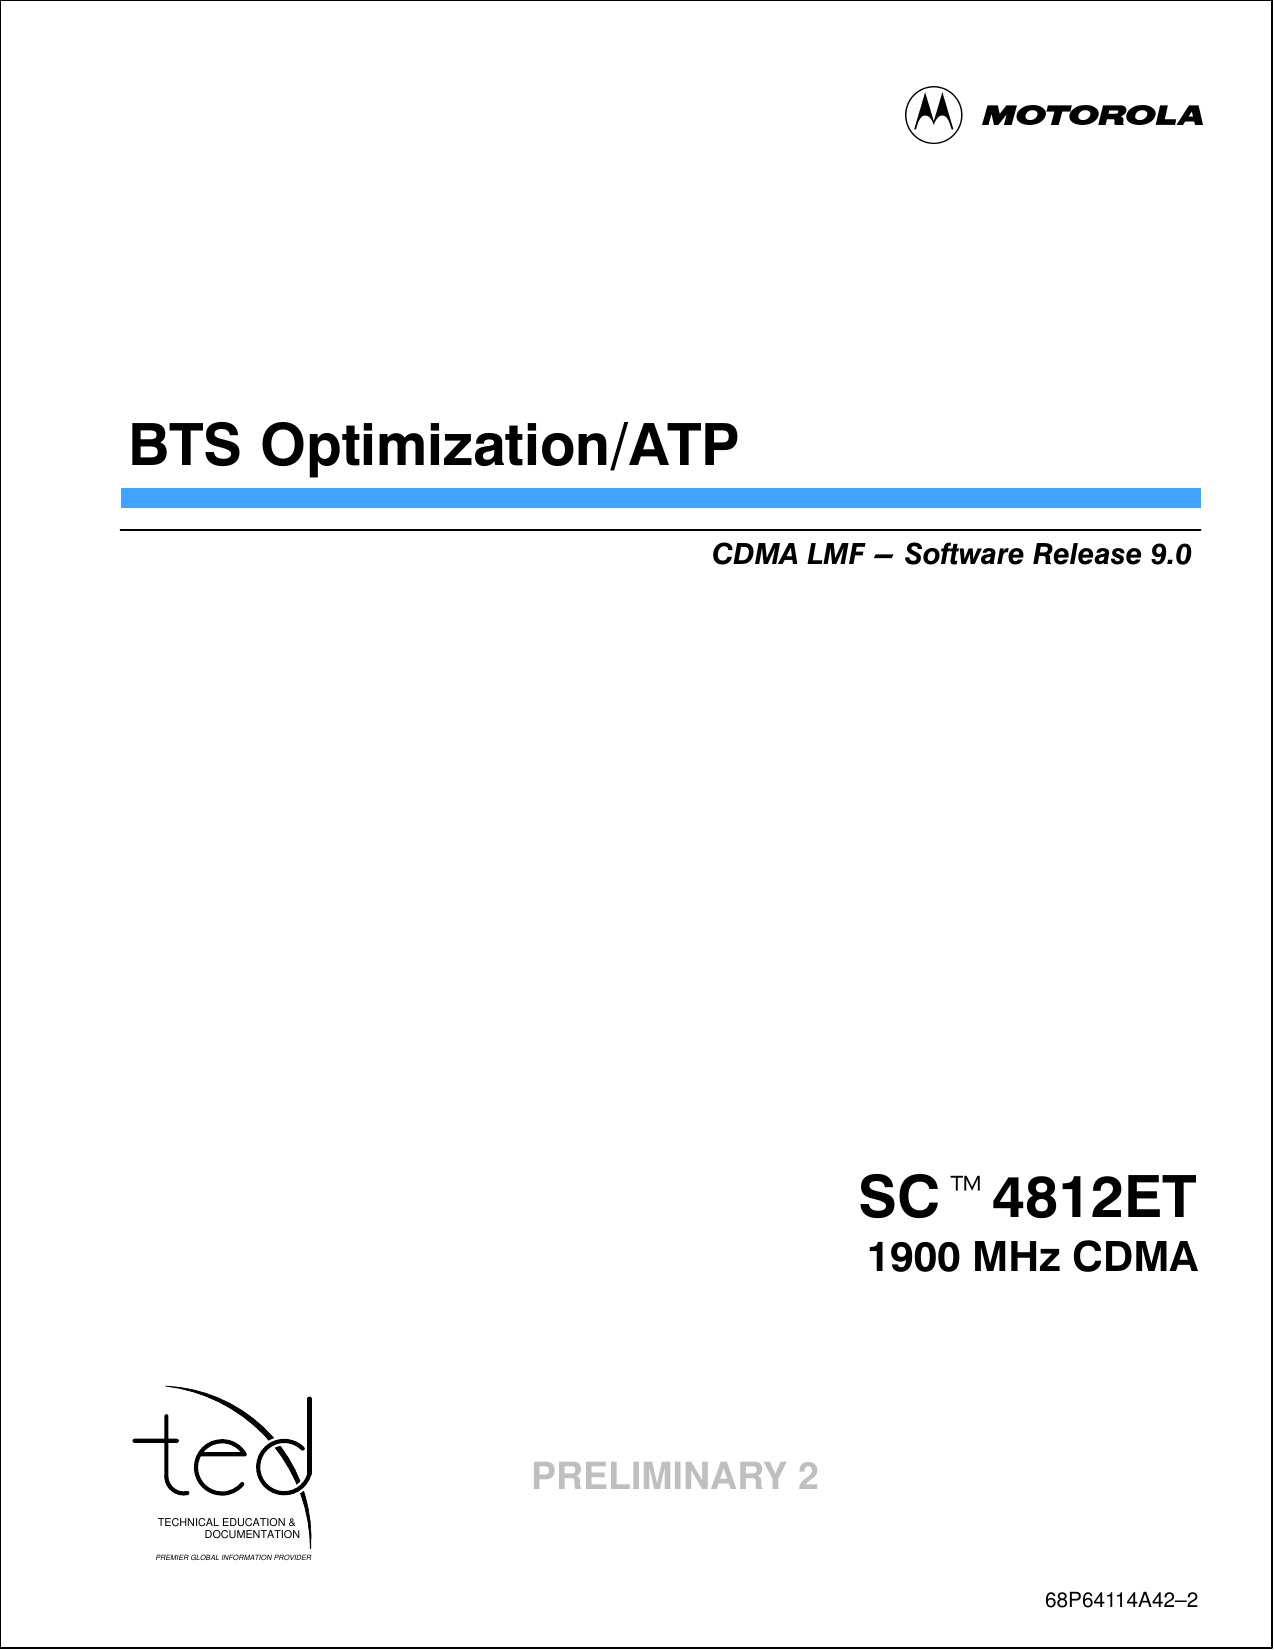 TECHNICAL EDUCATION &amp;DOCUMENTATIONPREMIER GLOBAL INFORMATION PROVIDERSCt4812ETBTS Optimization/ATP1900 MHz CDMA68P64114A42–2PRELIMINARY 2CDMA LMF - Software Release 9.0